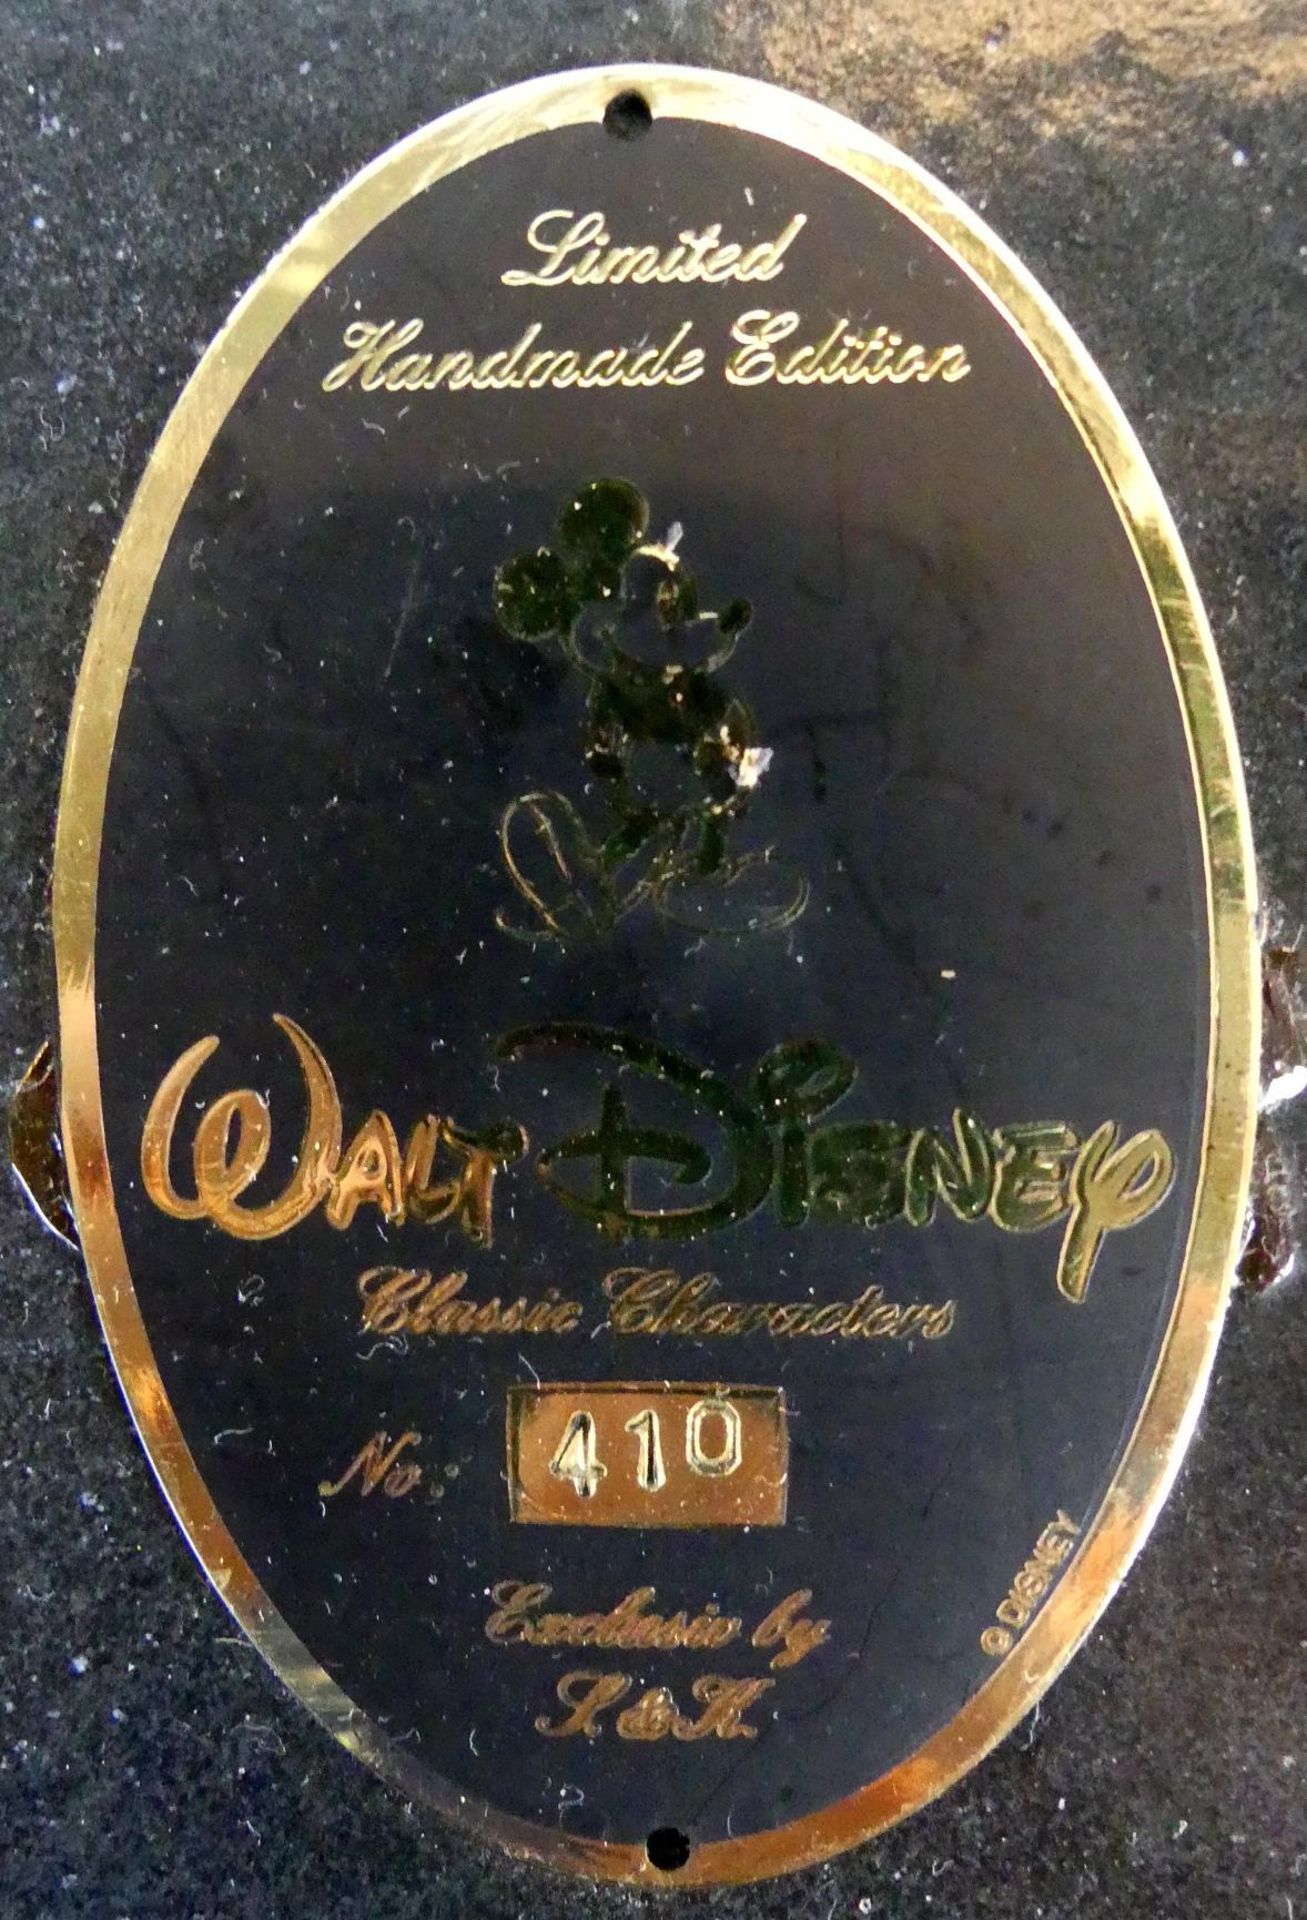 Blechschild, Mini Mouse, Walt Disney, oval, Limited Handmade Edition, - Bild 2 aus 2